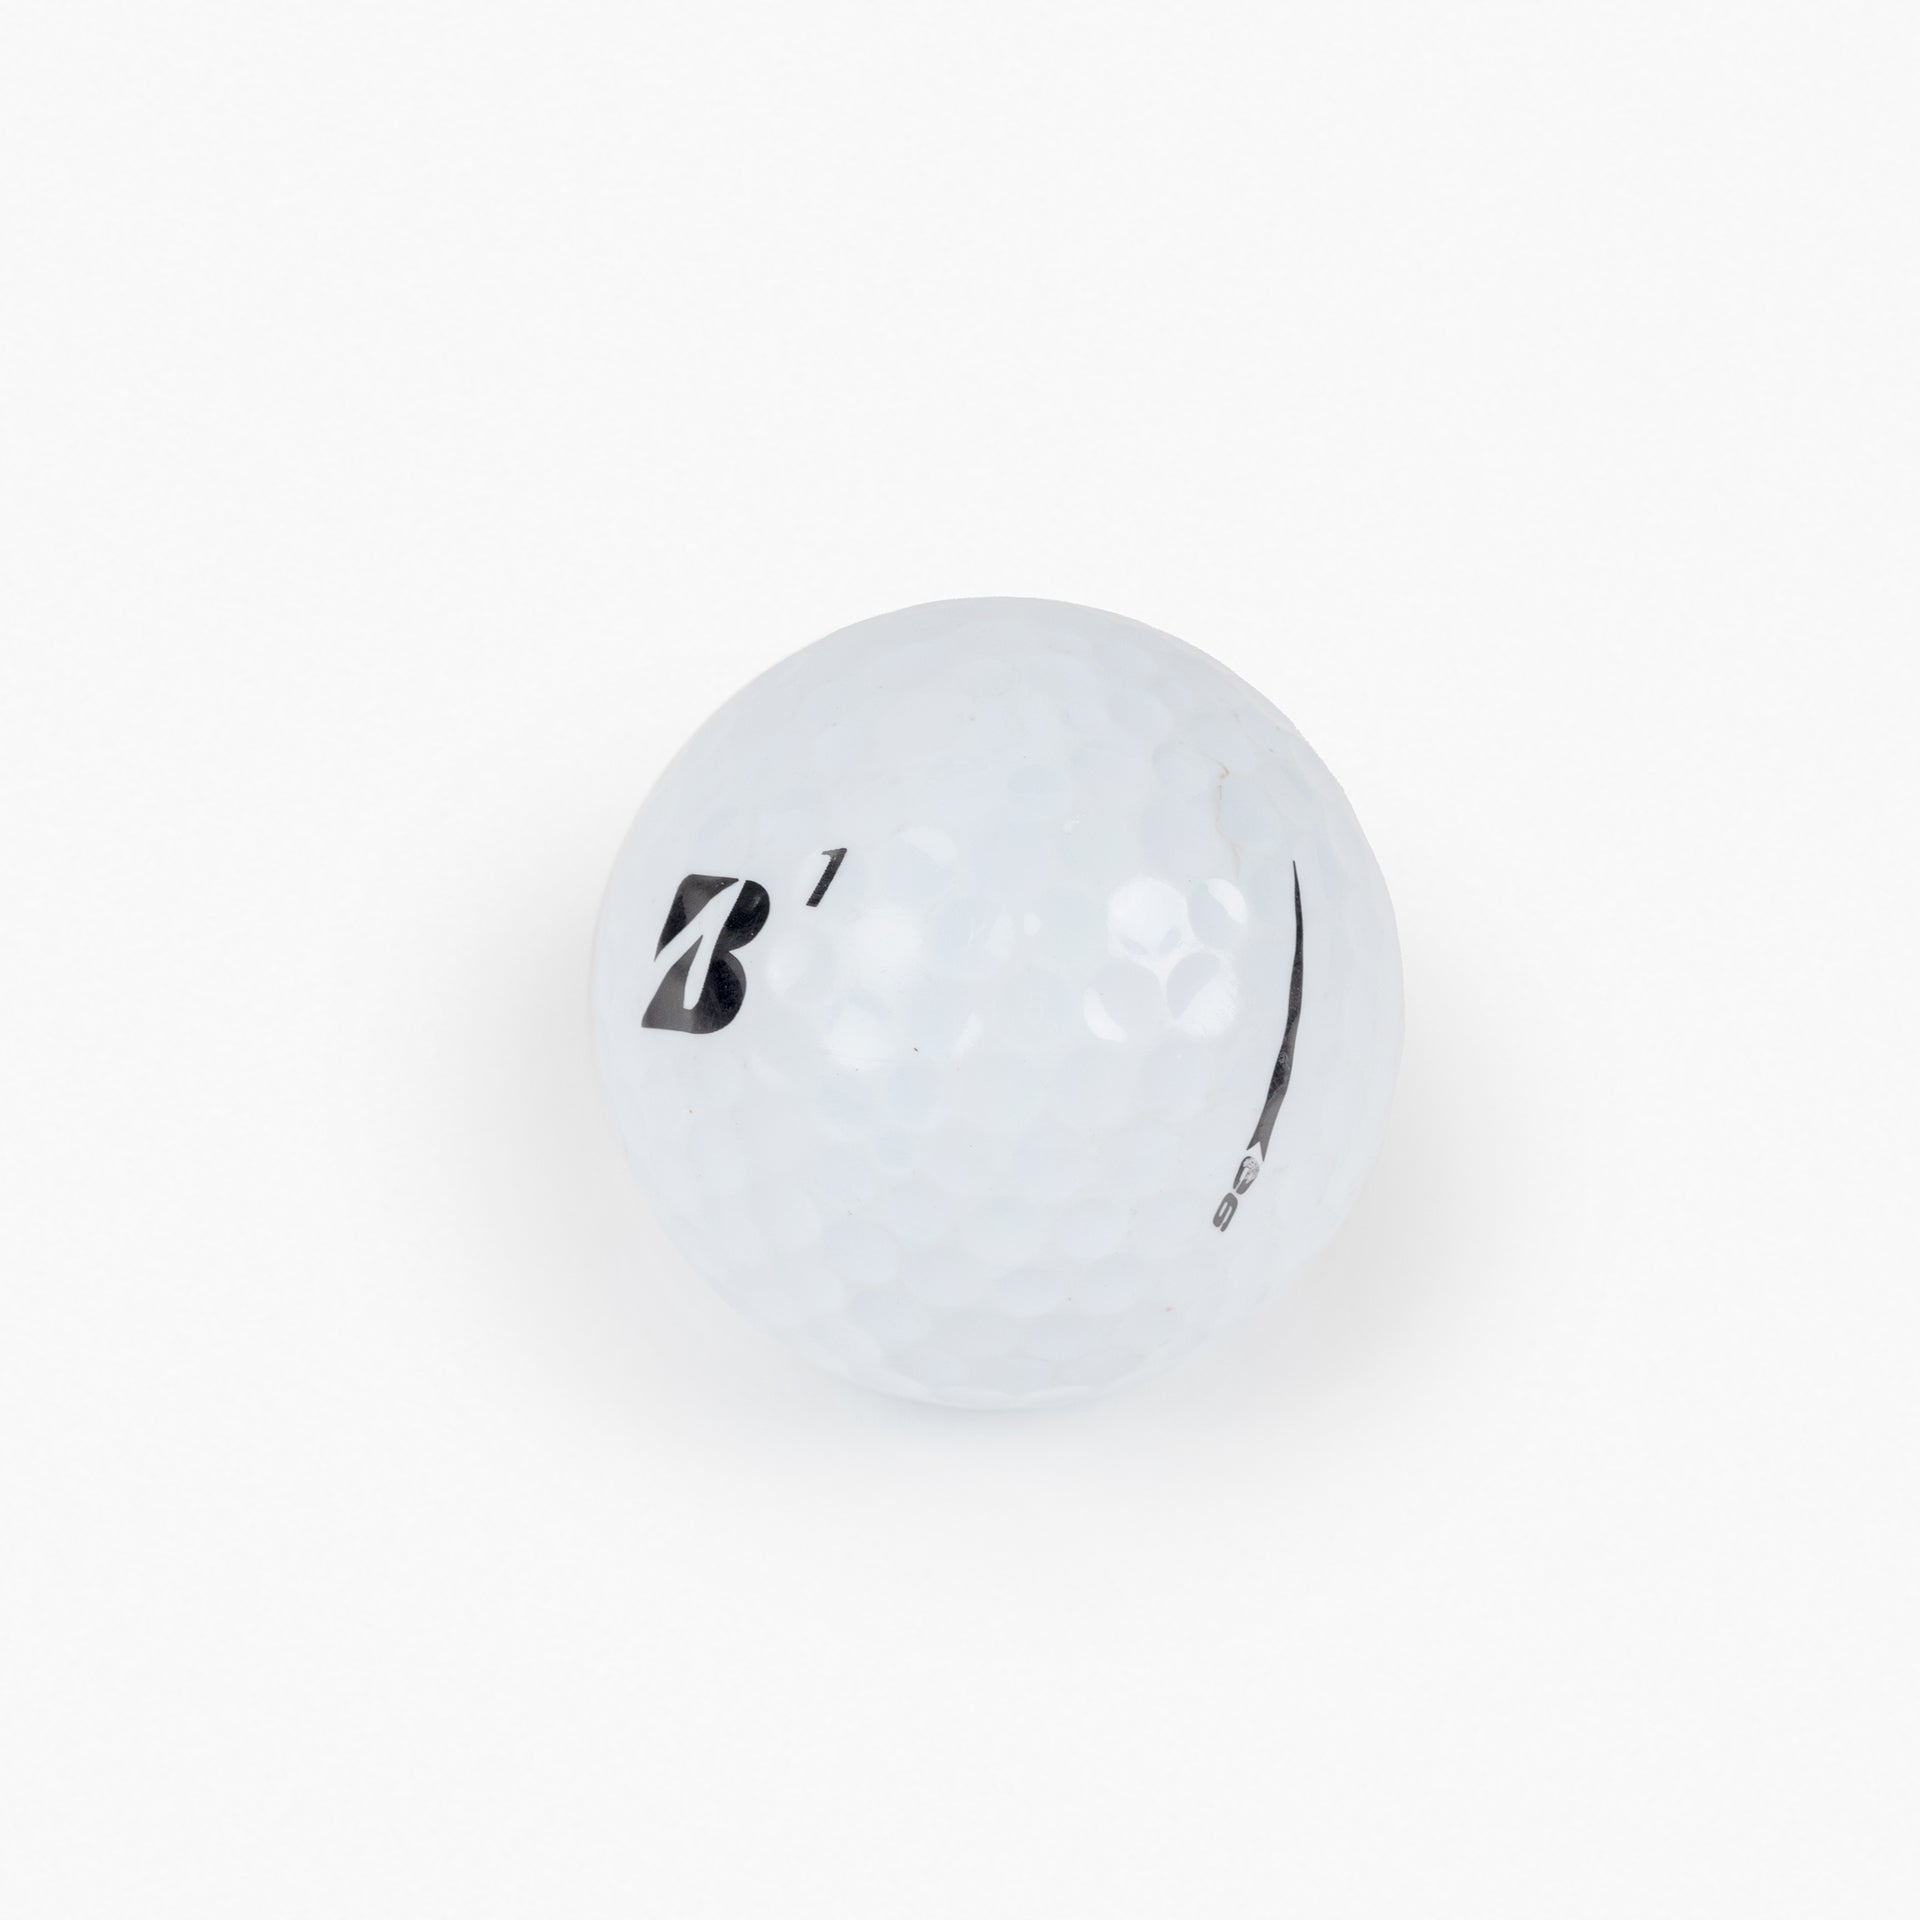 recycled bridgestone e6 golf ball